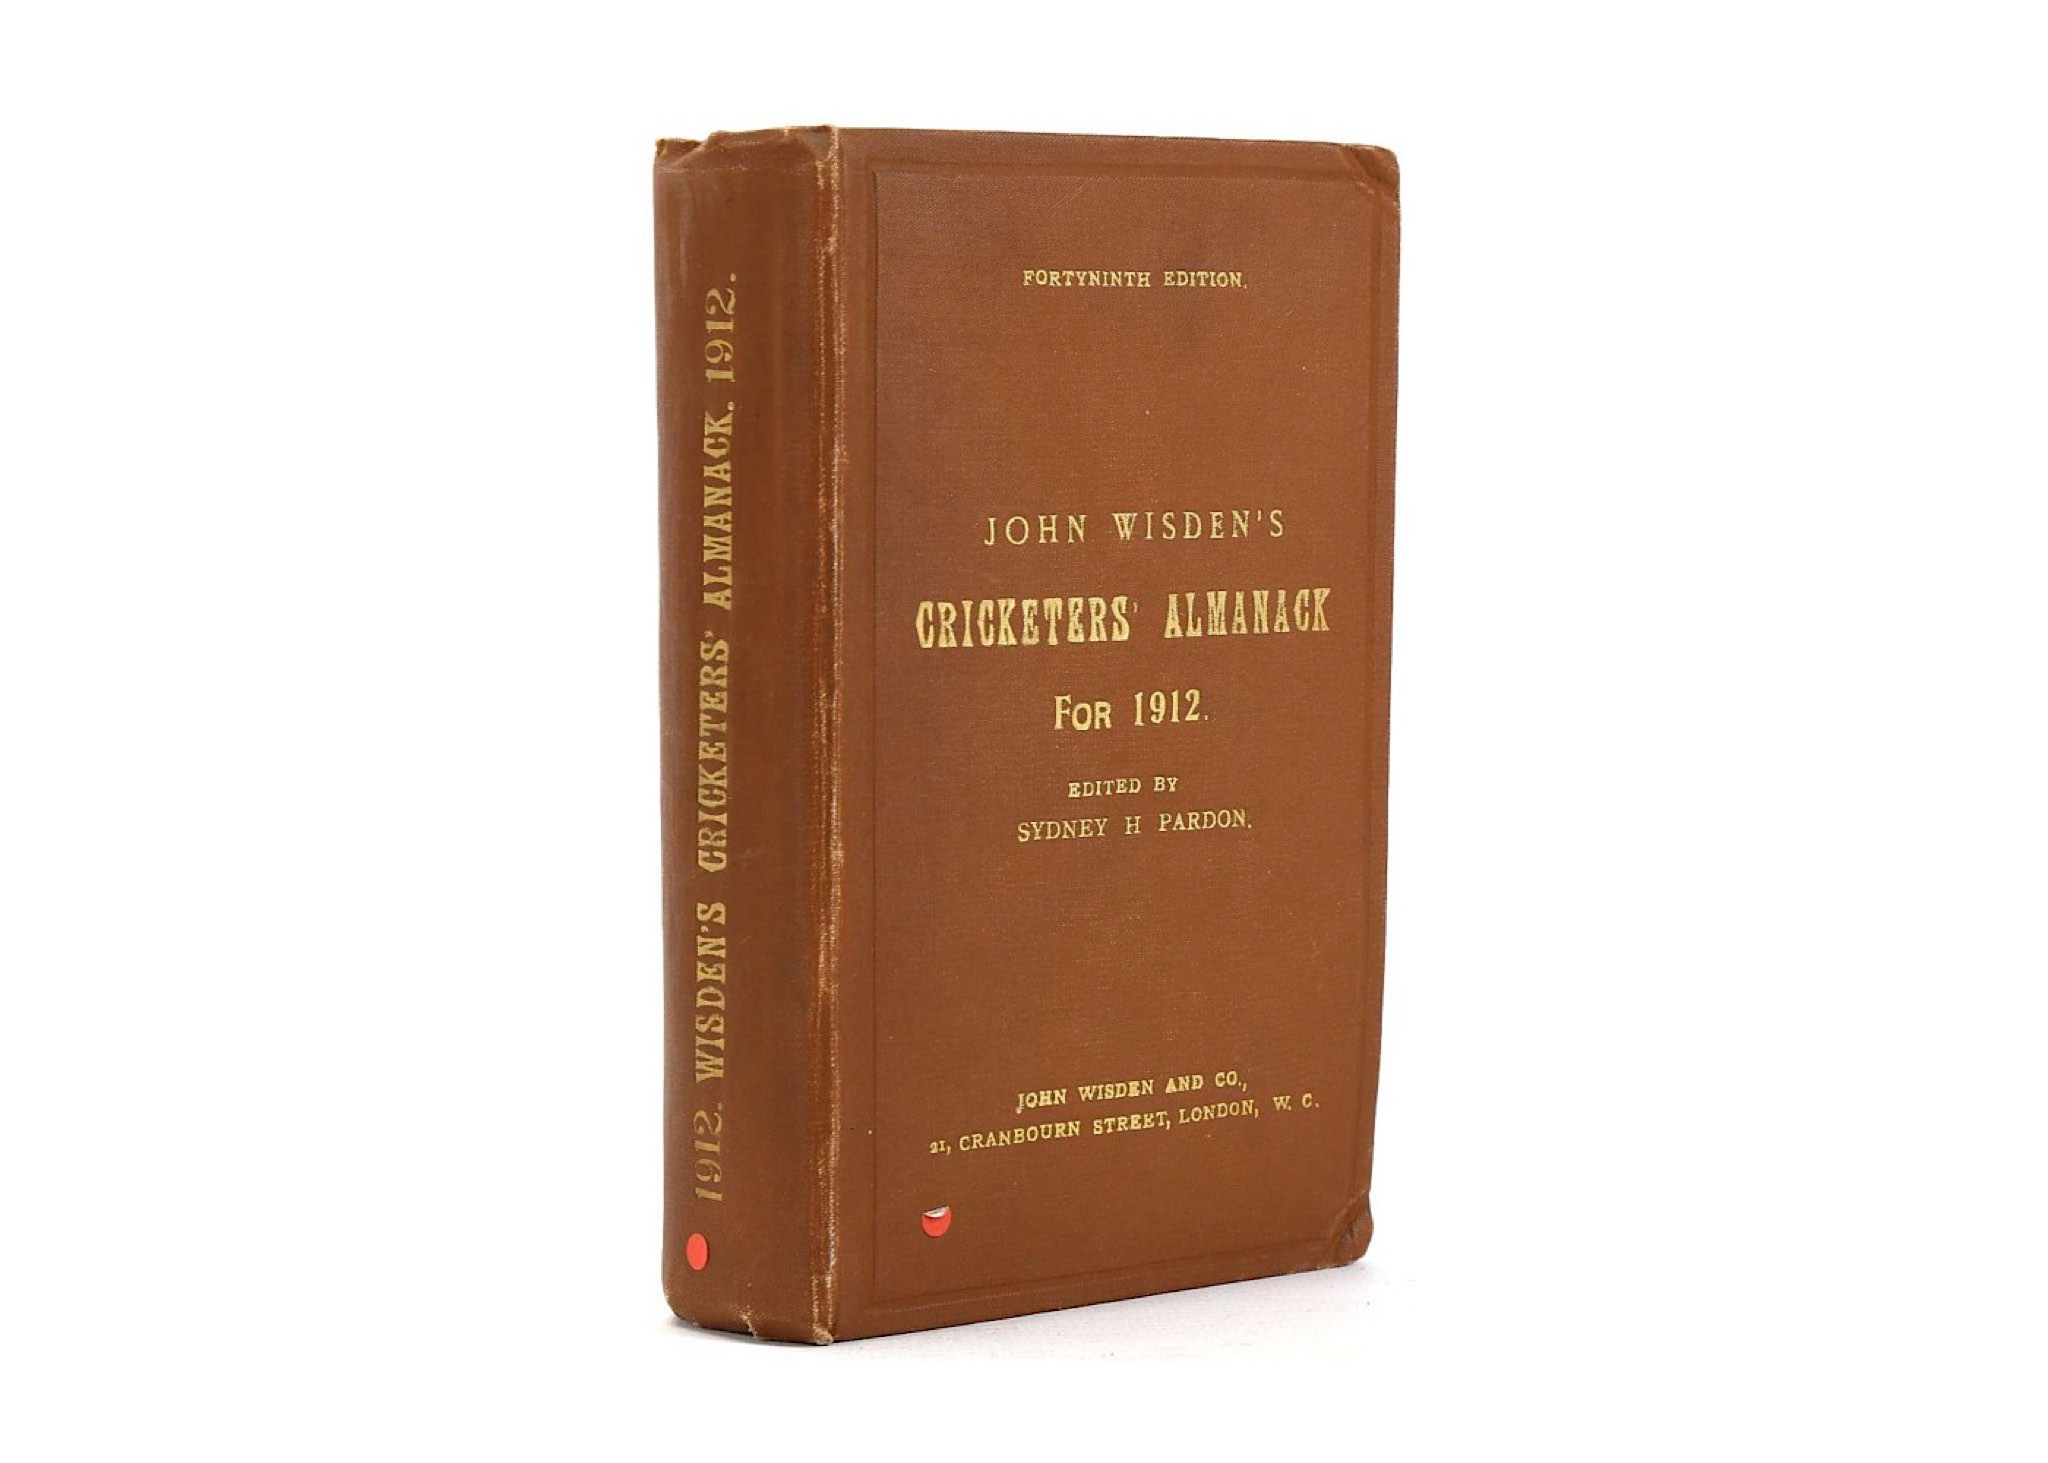 John Wisden’s Cricketers Almanack for 1912. London: John Wisden and Co., 1912. 8vo. Photo-plate (